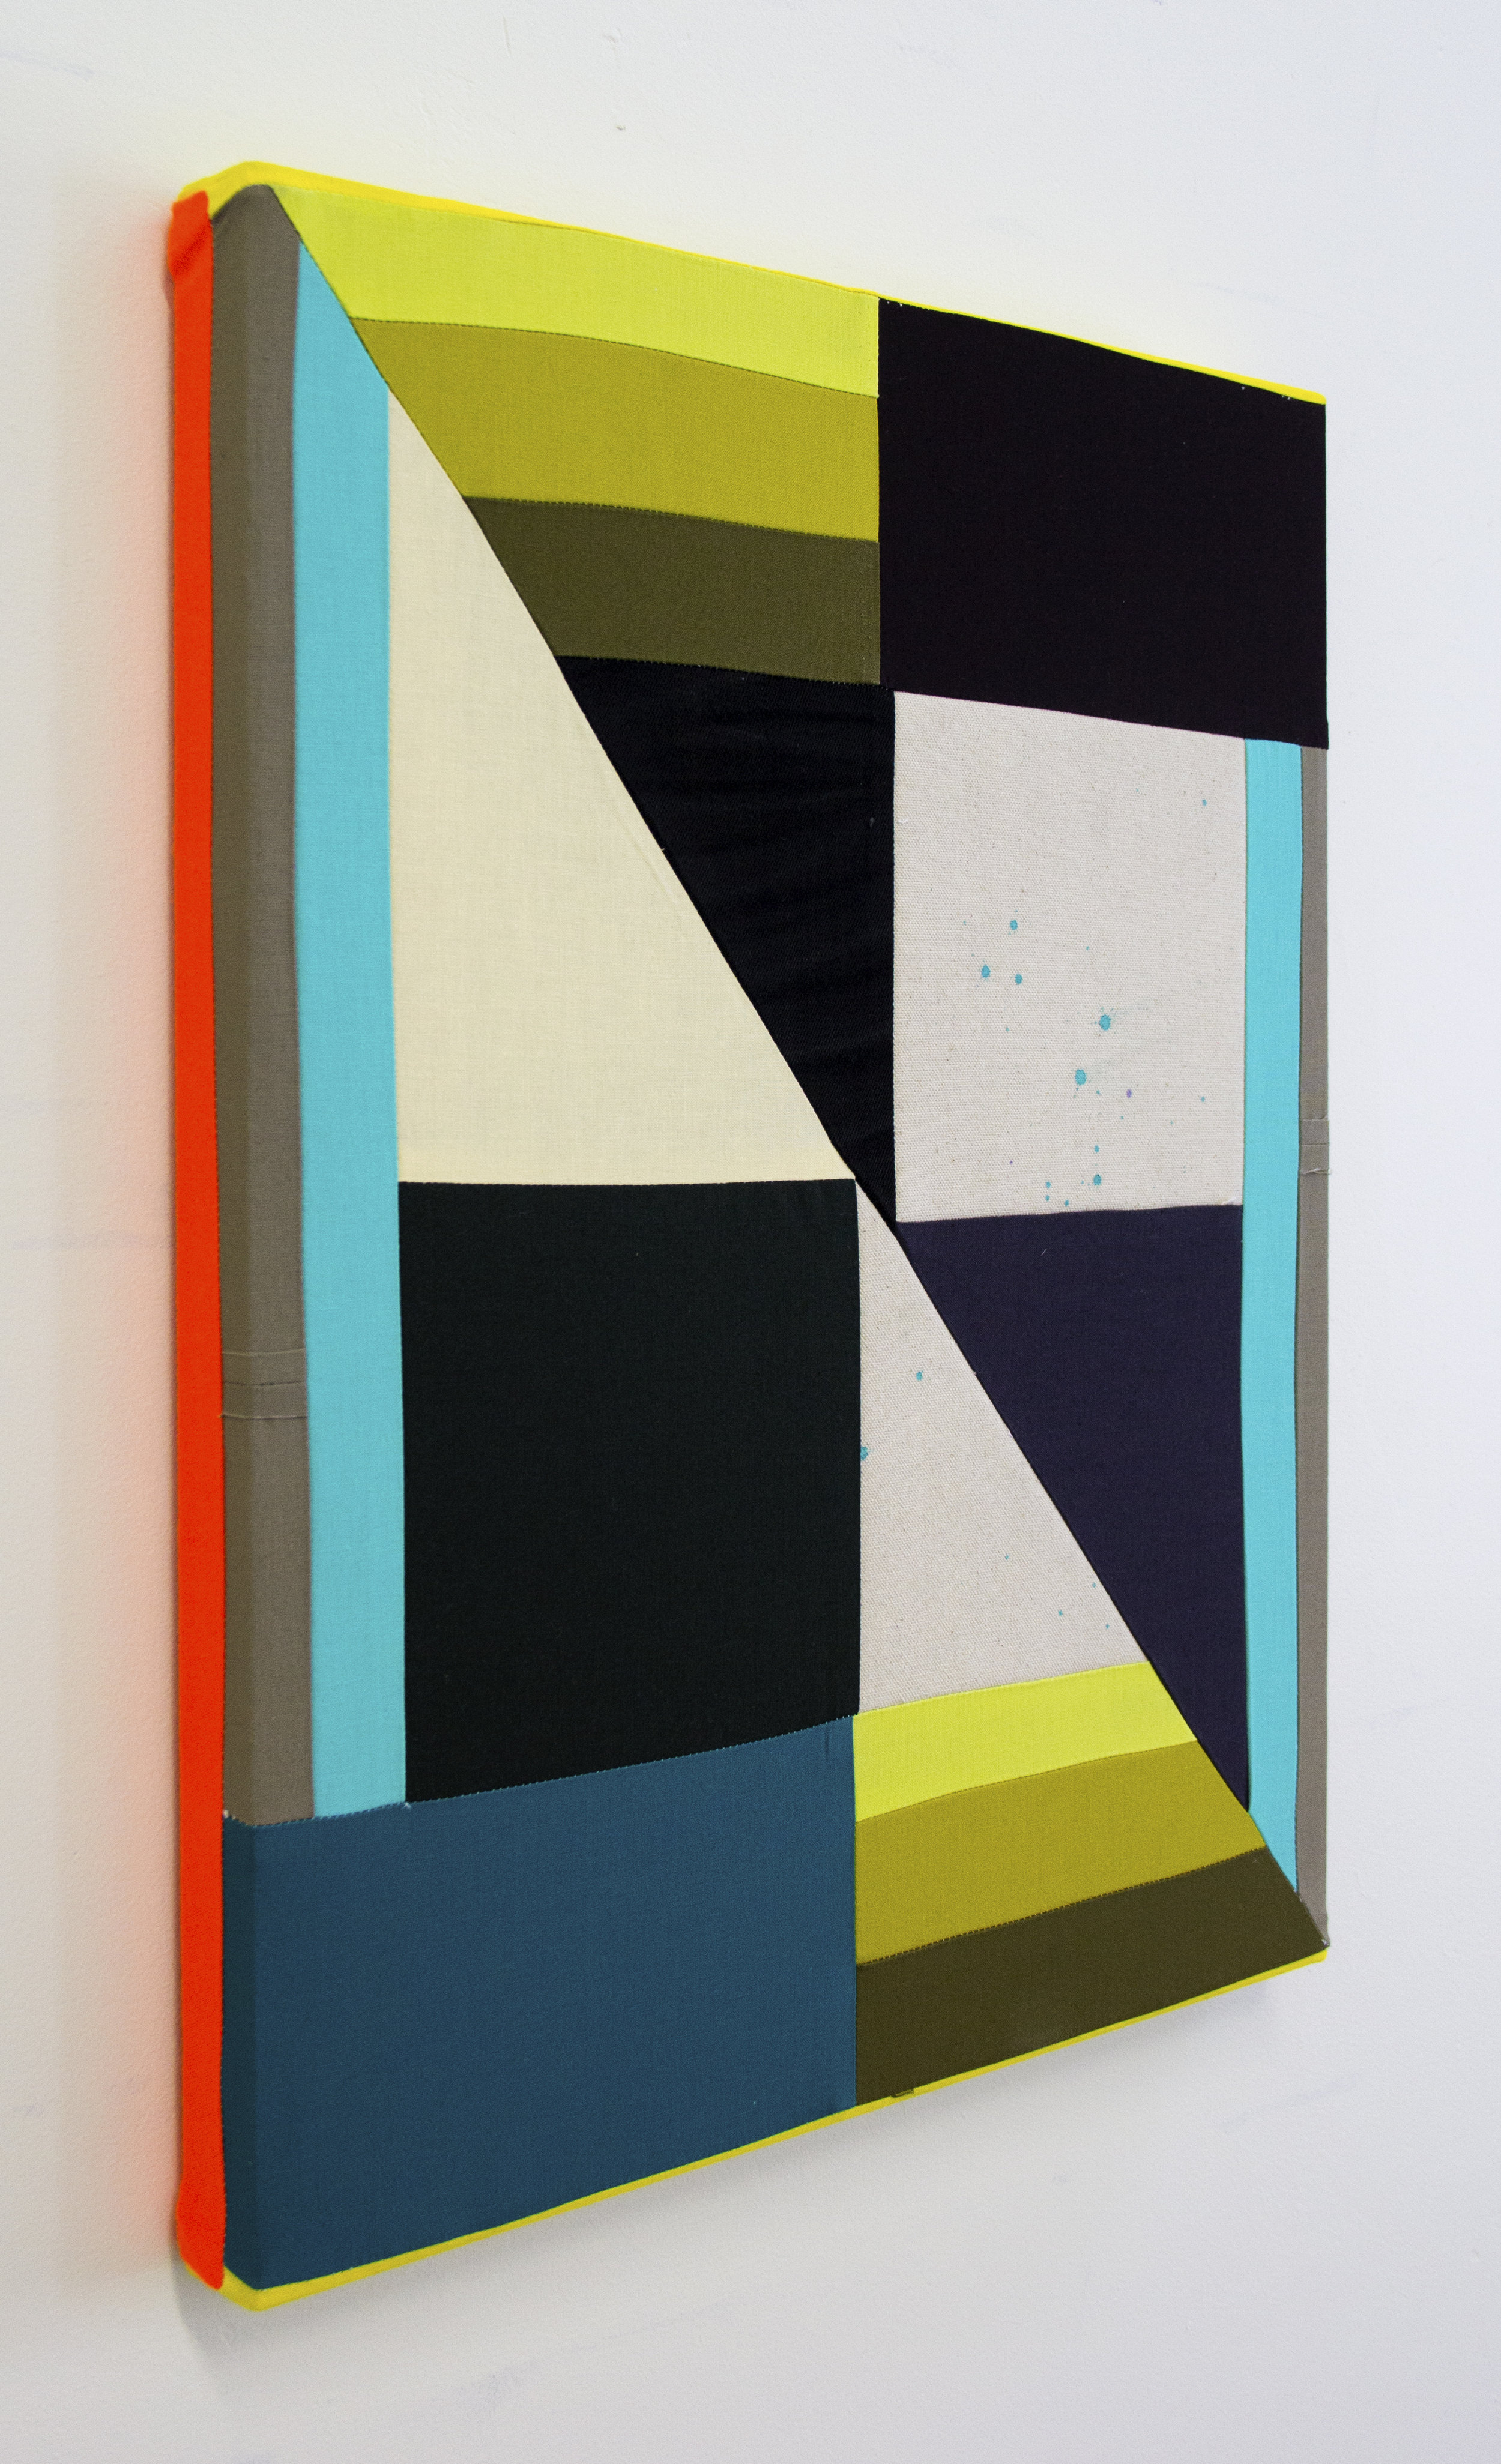    of Color, No. 7 (side view)   ,  2019 Sewn canvas, cotton, Levi’s denim, acrylic 20 x 16 inches (50.8 x 40.6 cm) 